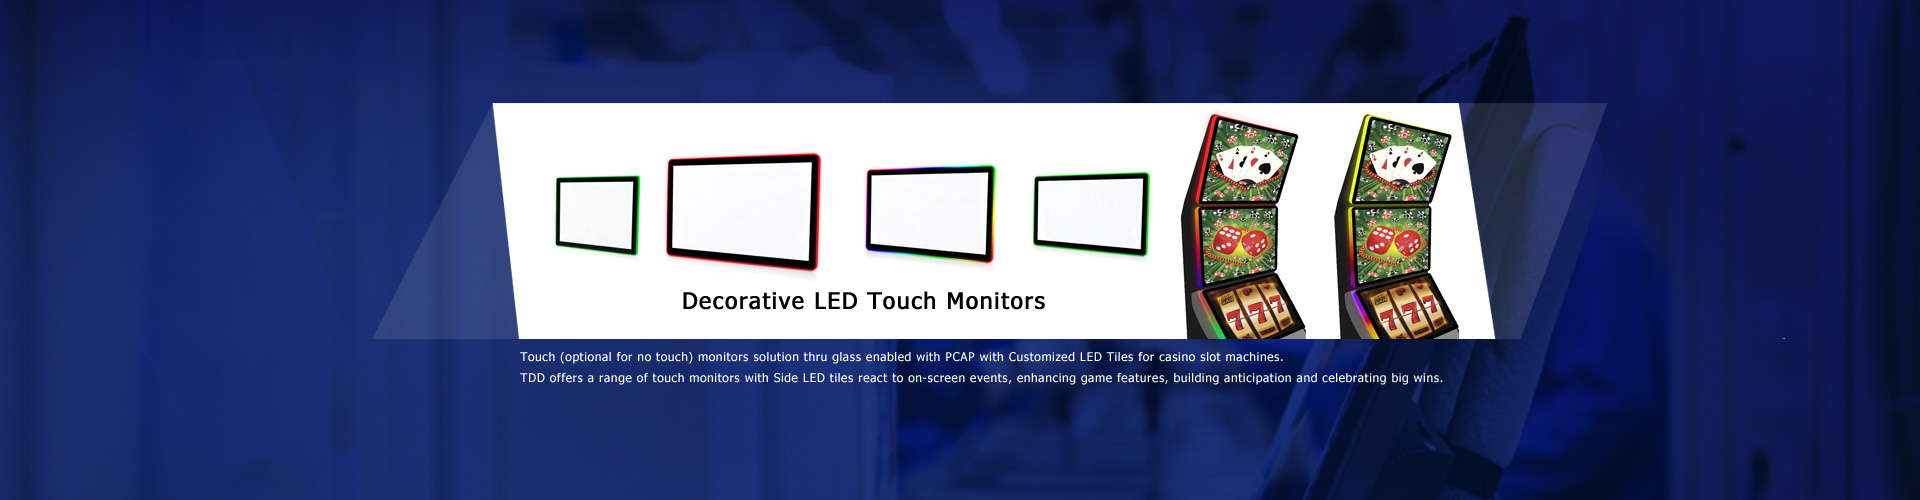 Decorative LED Touch Monitors